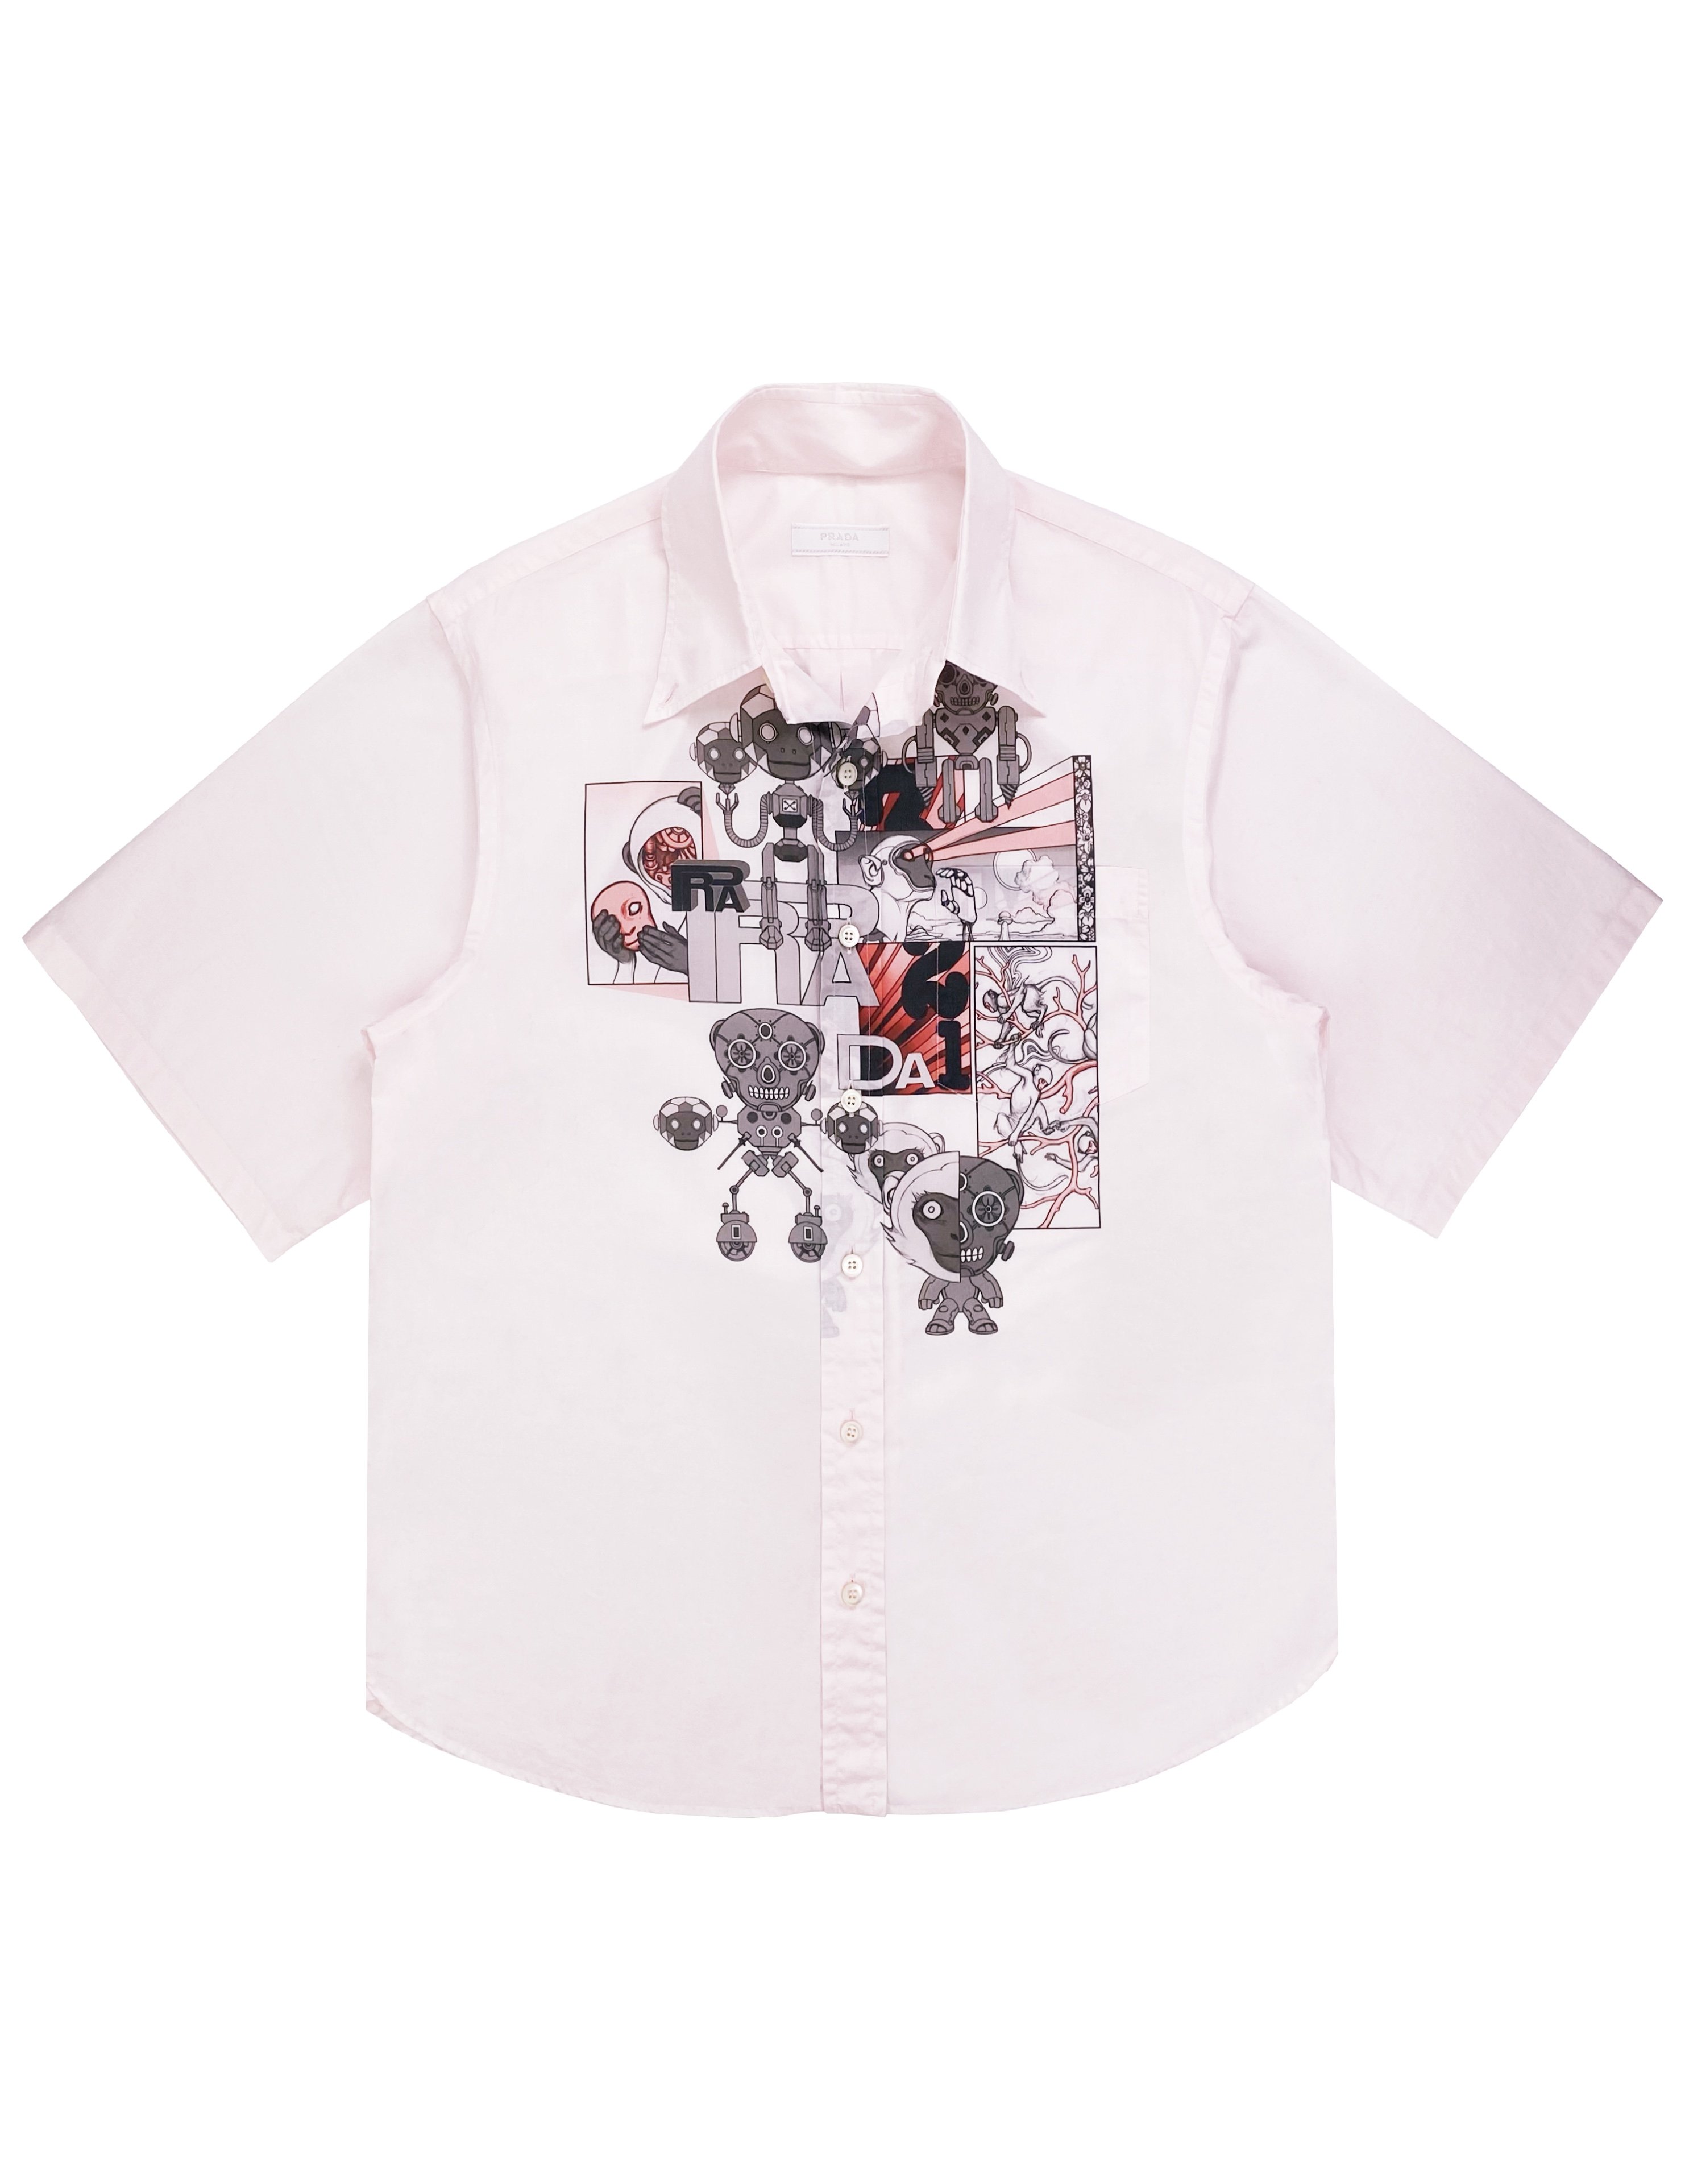 SS18 Prada James Jean Laser Monkey Graphic Camp-collar Shirt